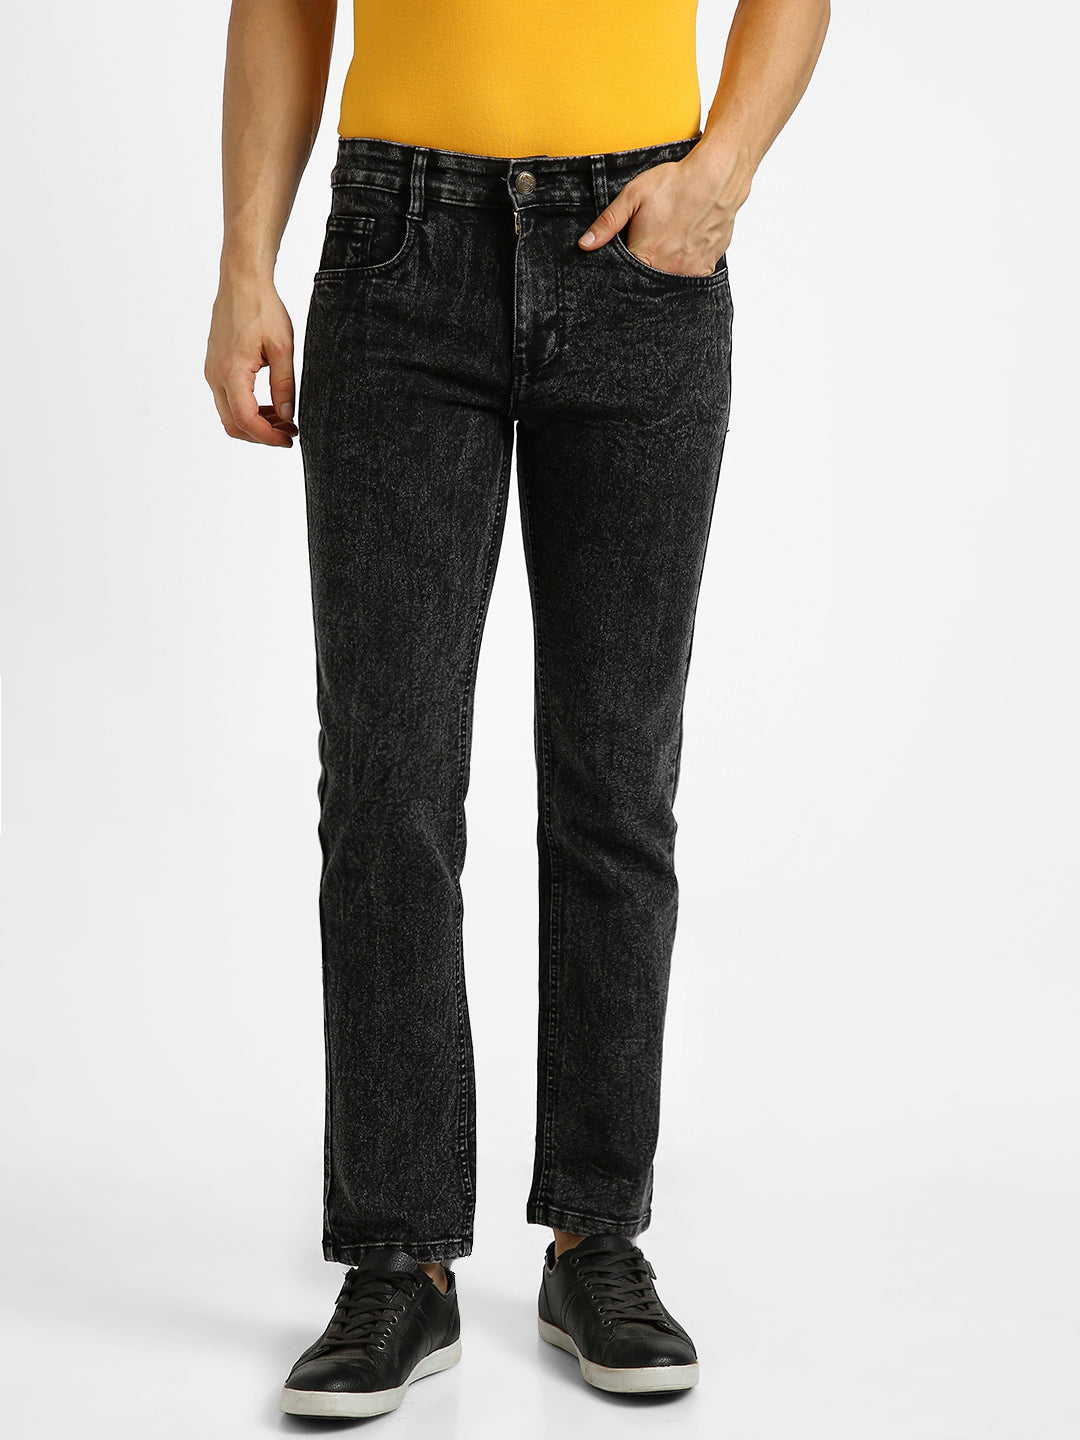 Urbano Fashion Men's Black Regular Fit Washed Jeans Stretchable